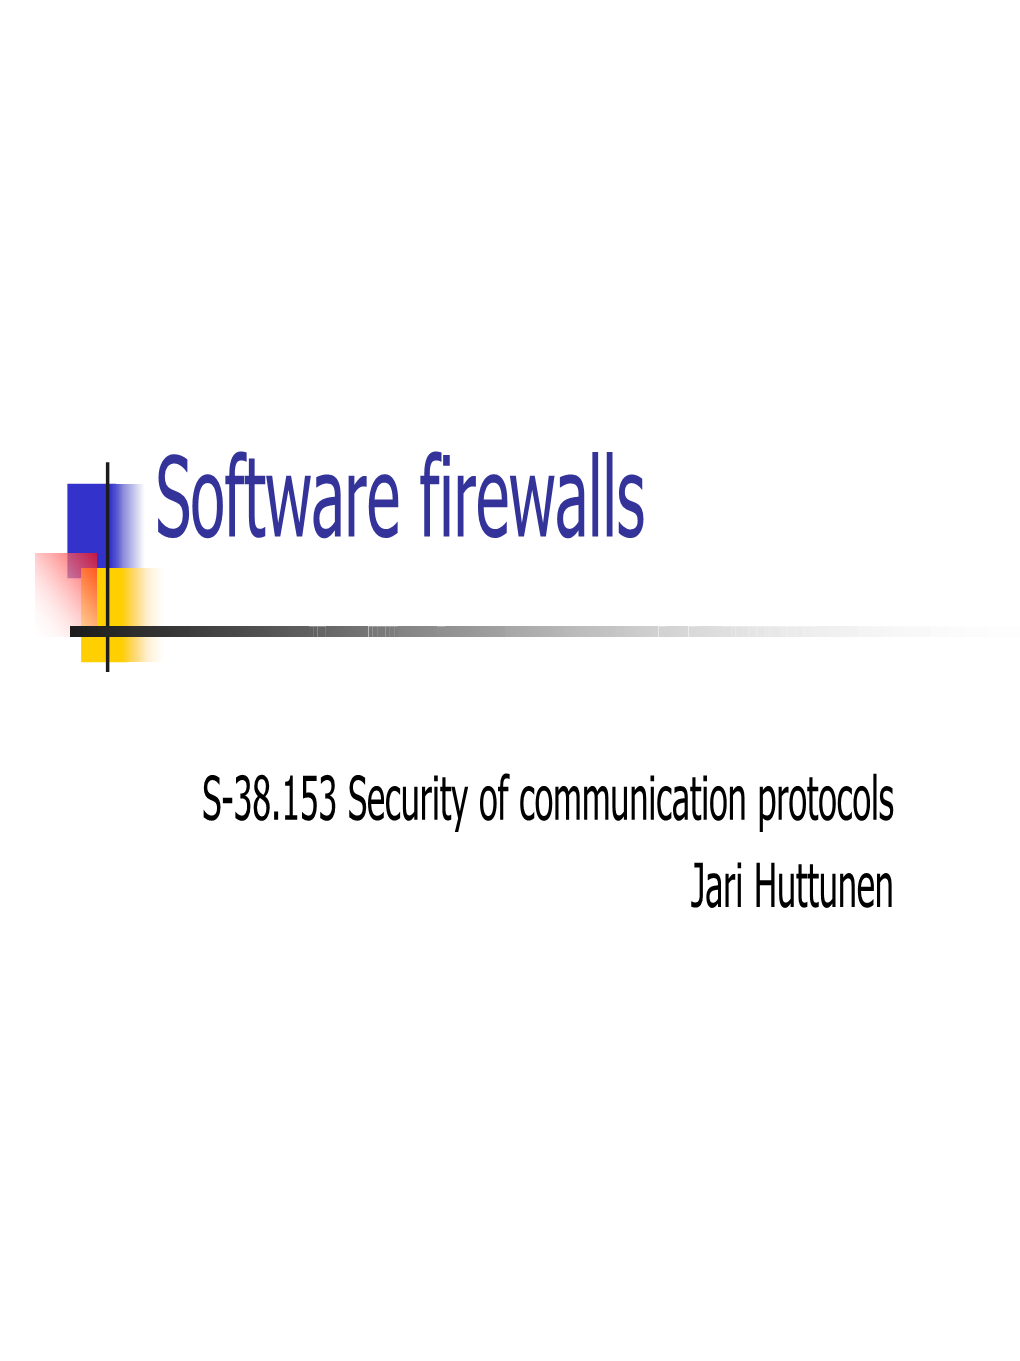 Norton Personal Firewall 2003